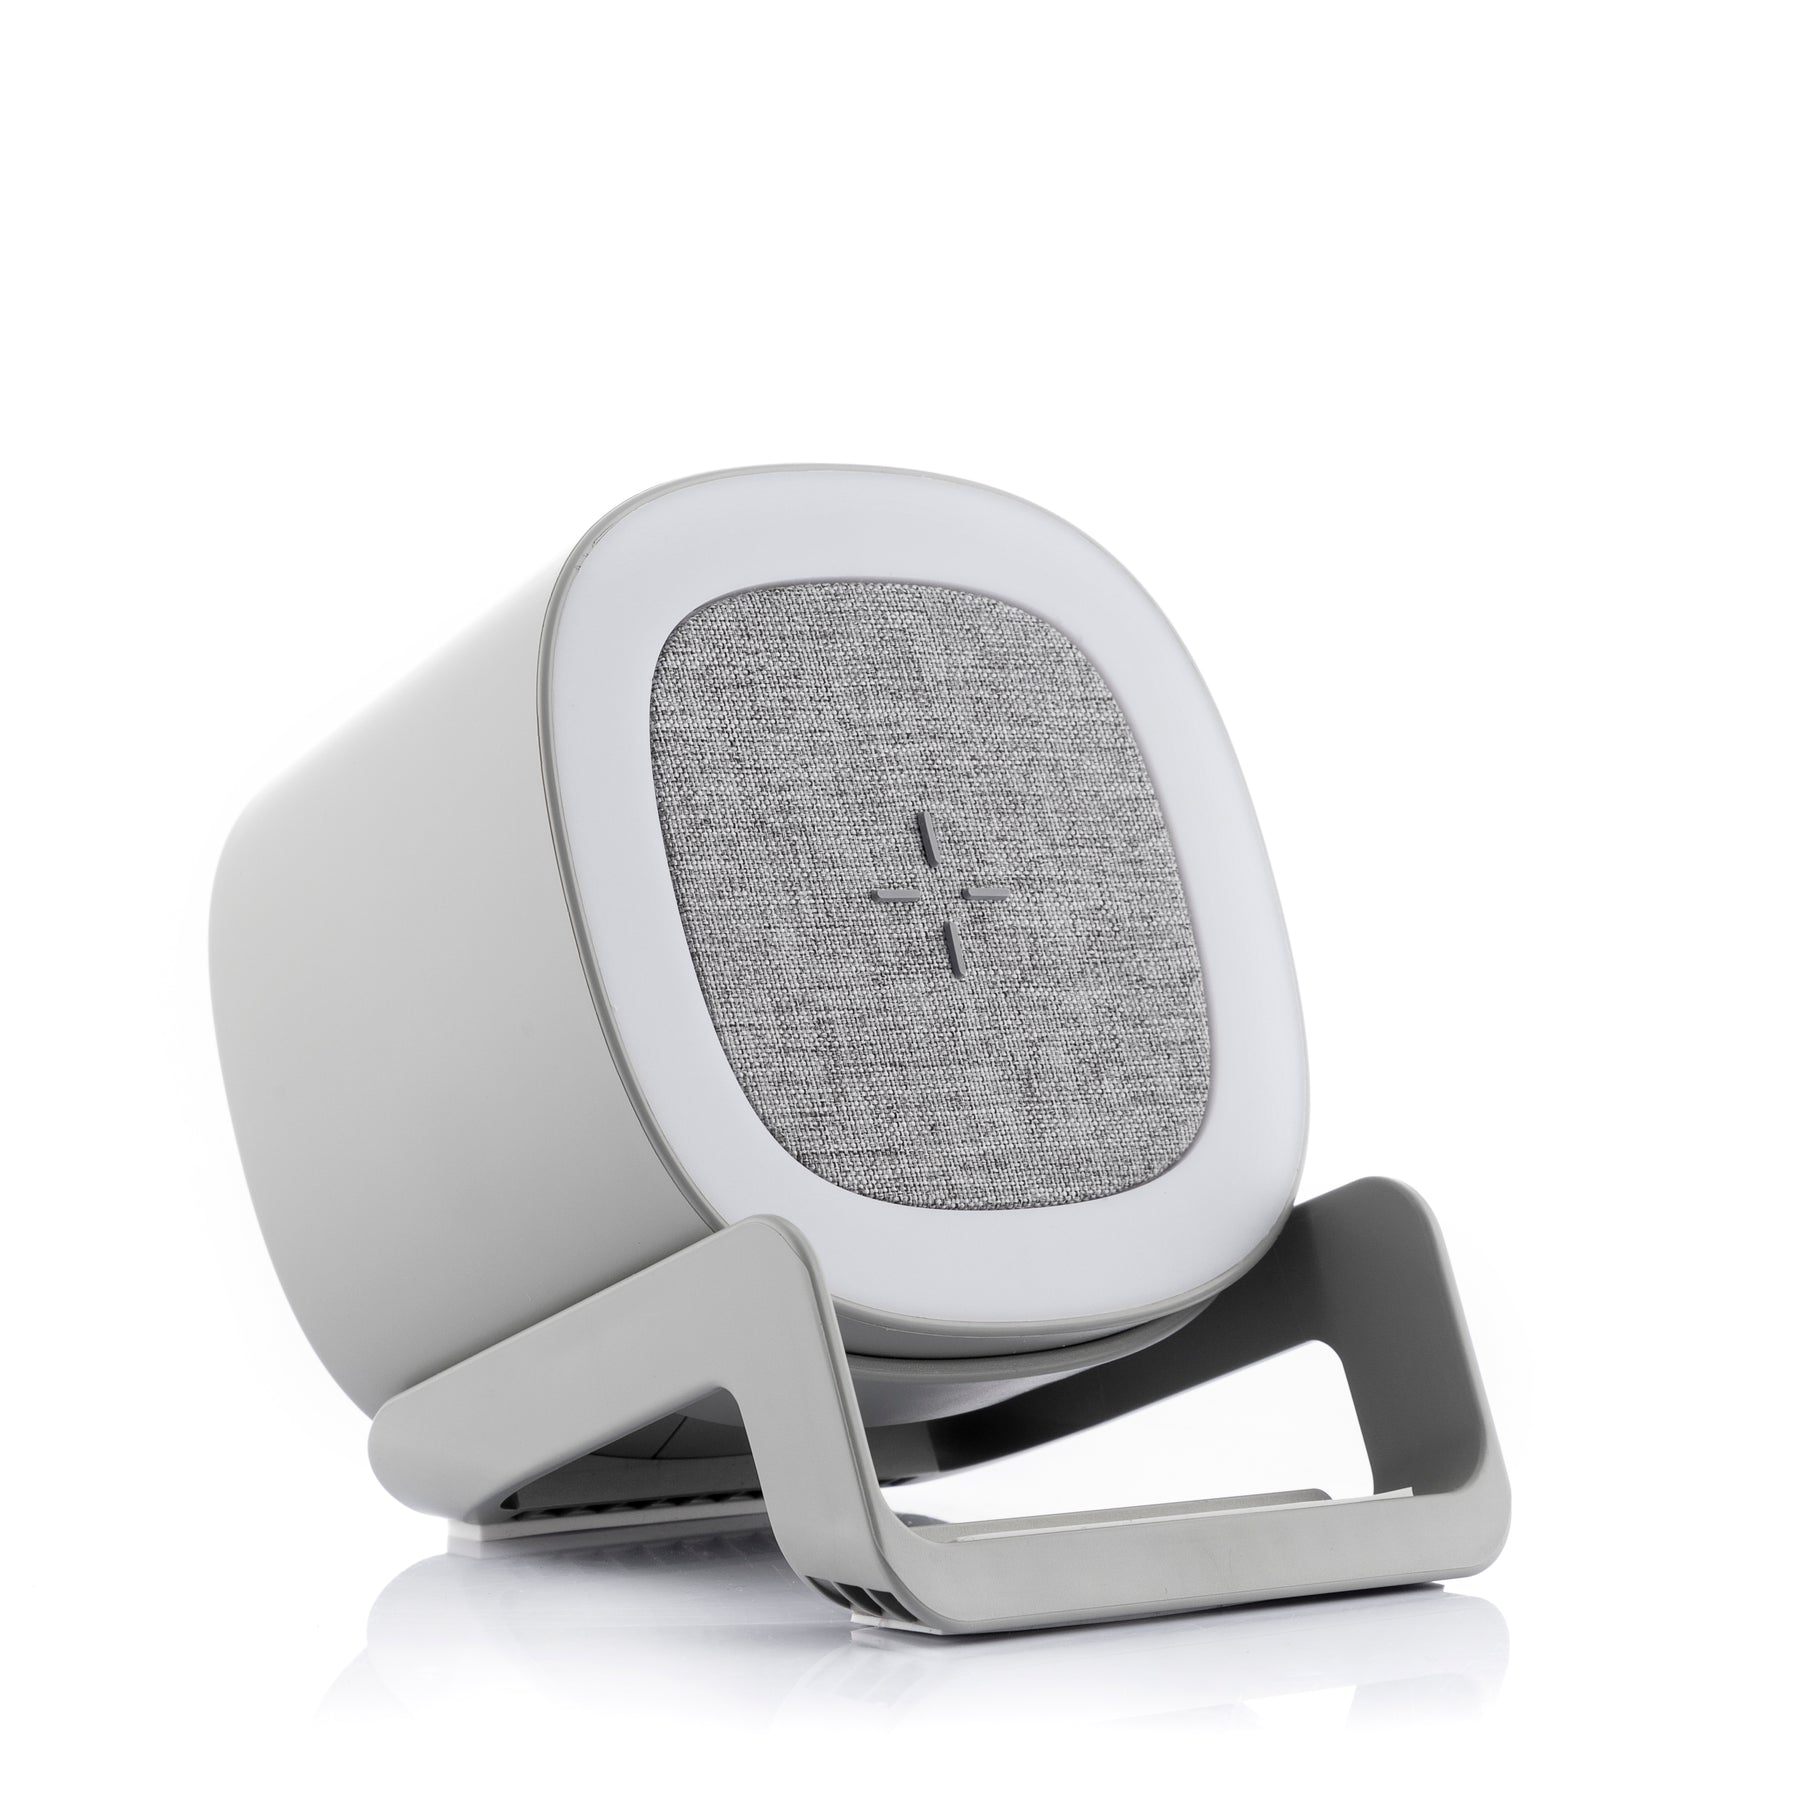 InnovaGoods Multifunction Wireless Speaker 